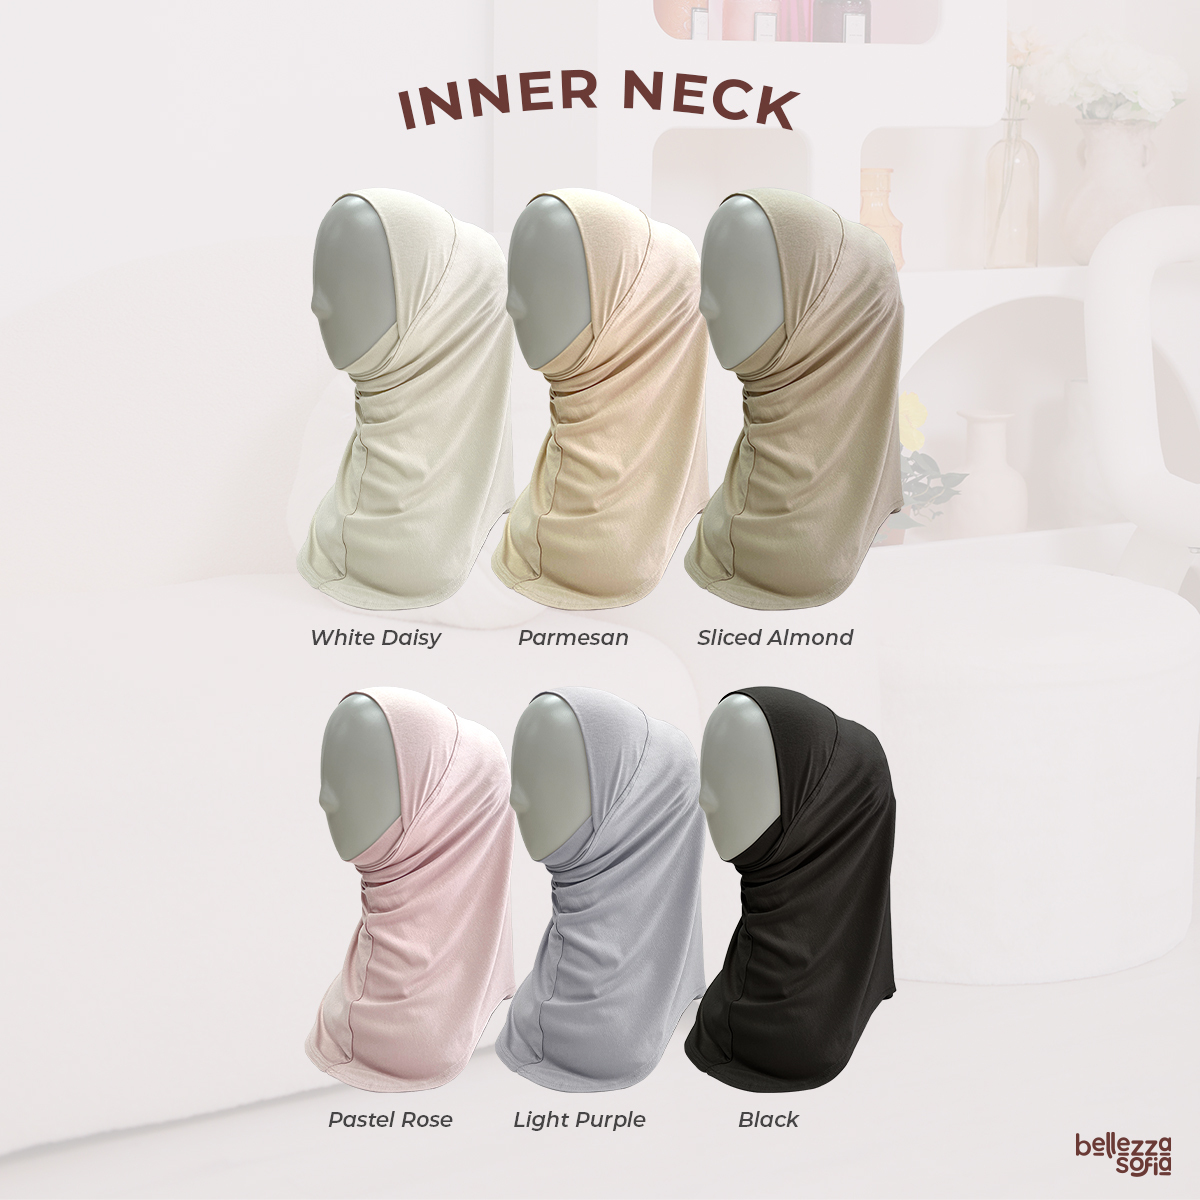 Inner Neck Catalogue